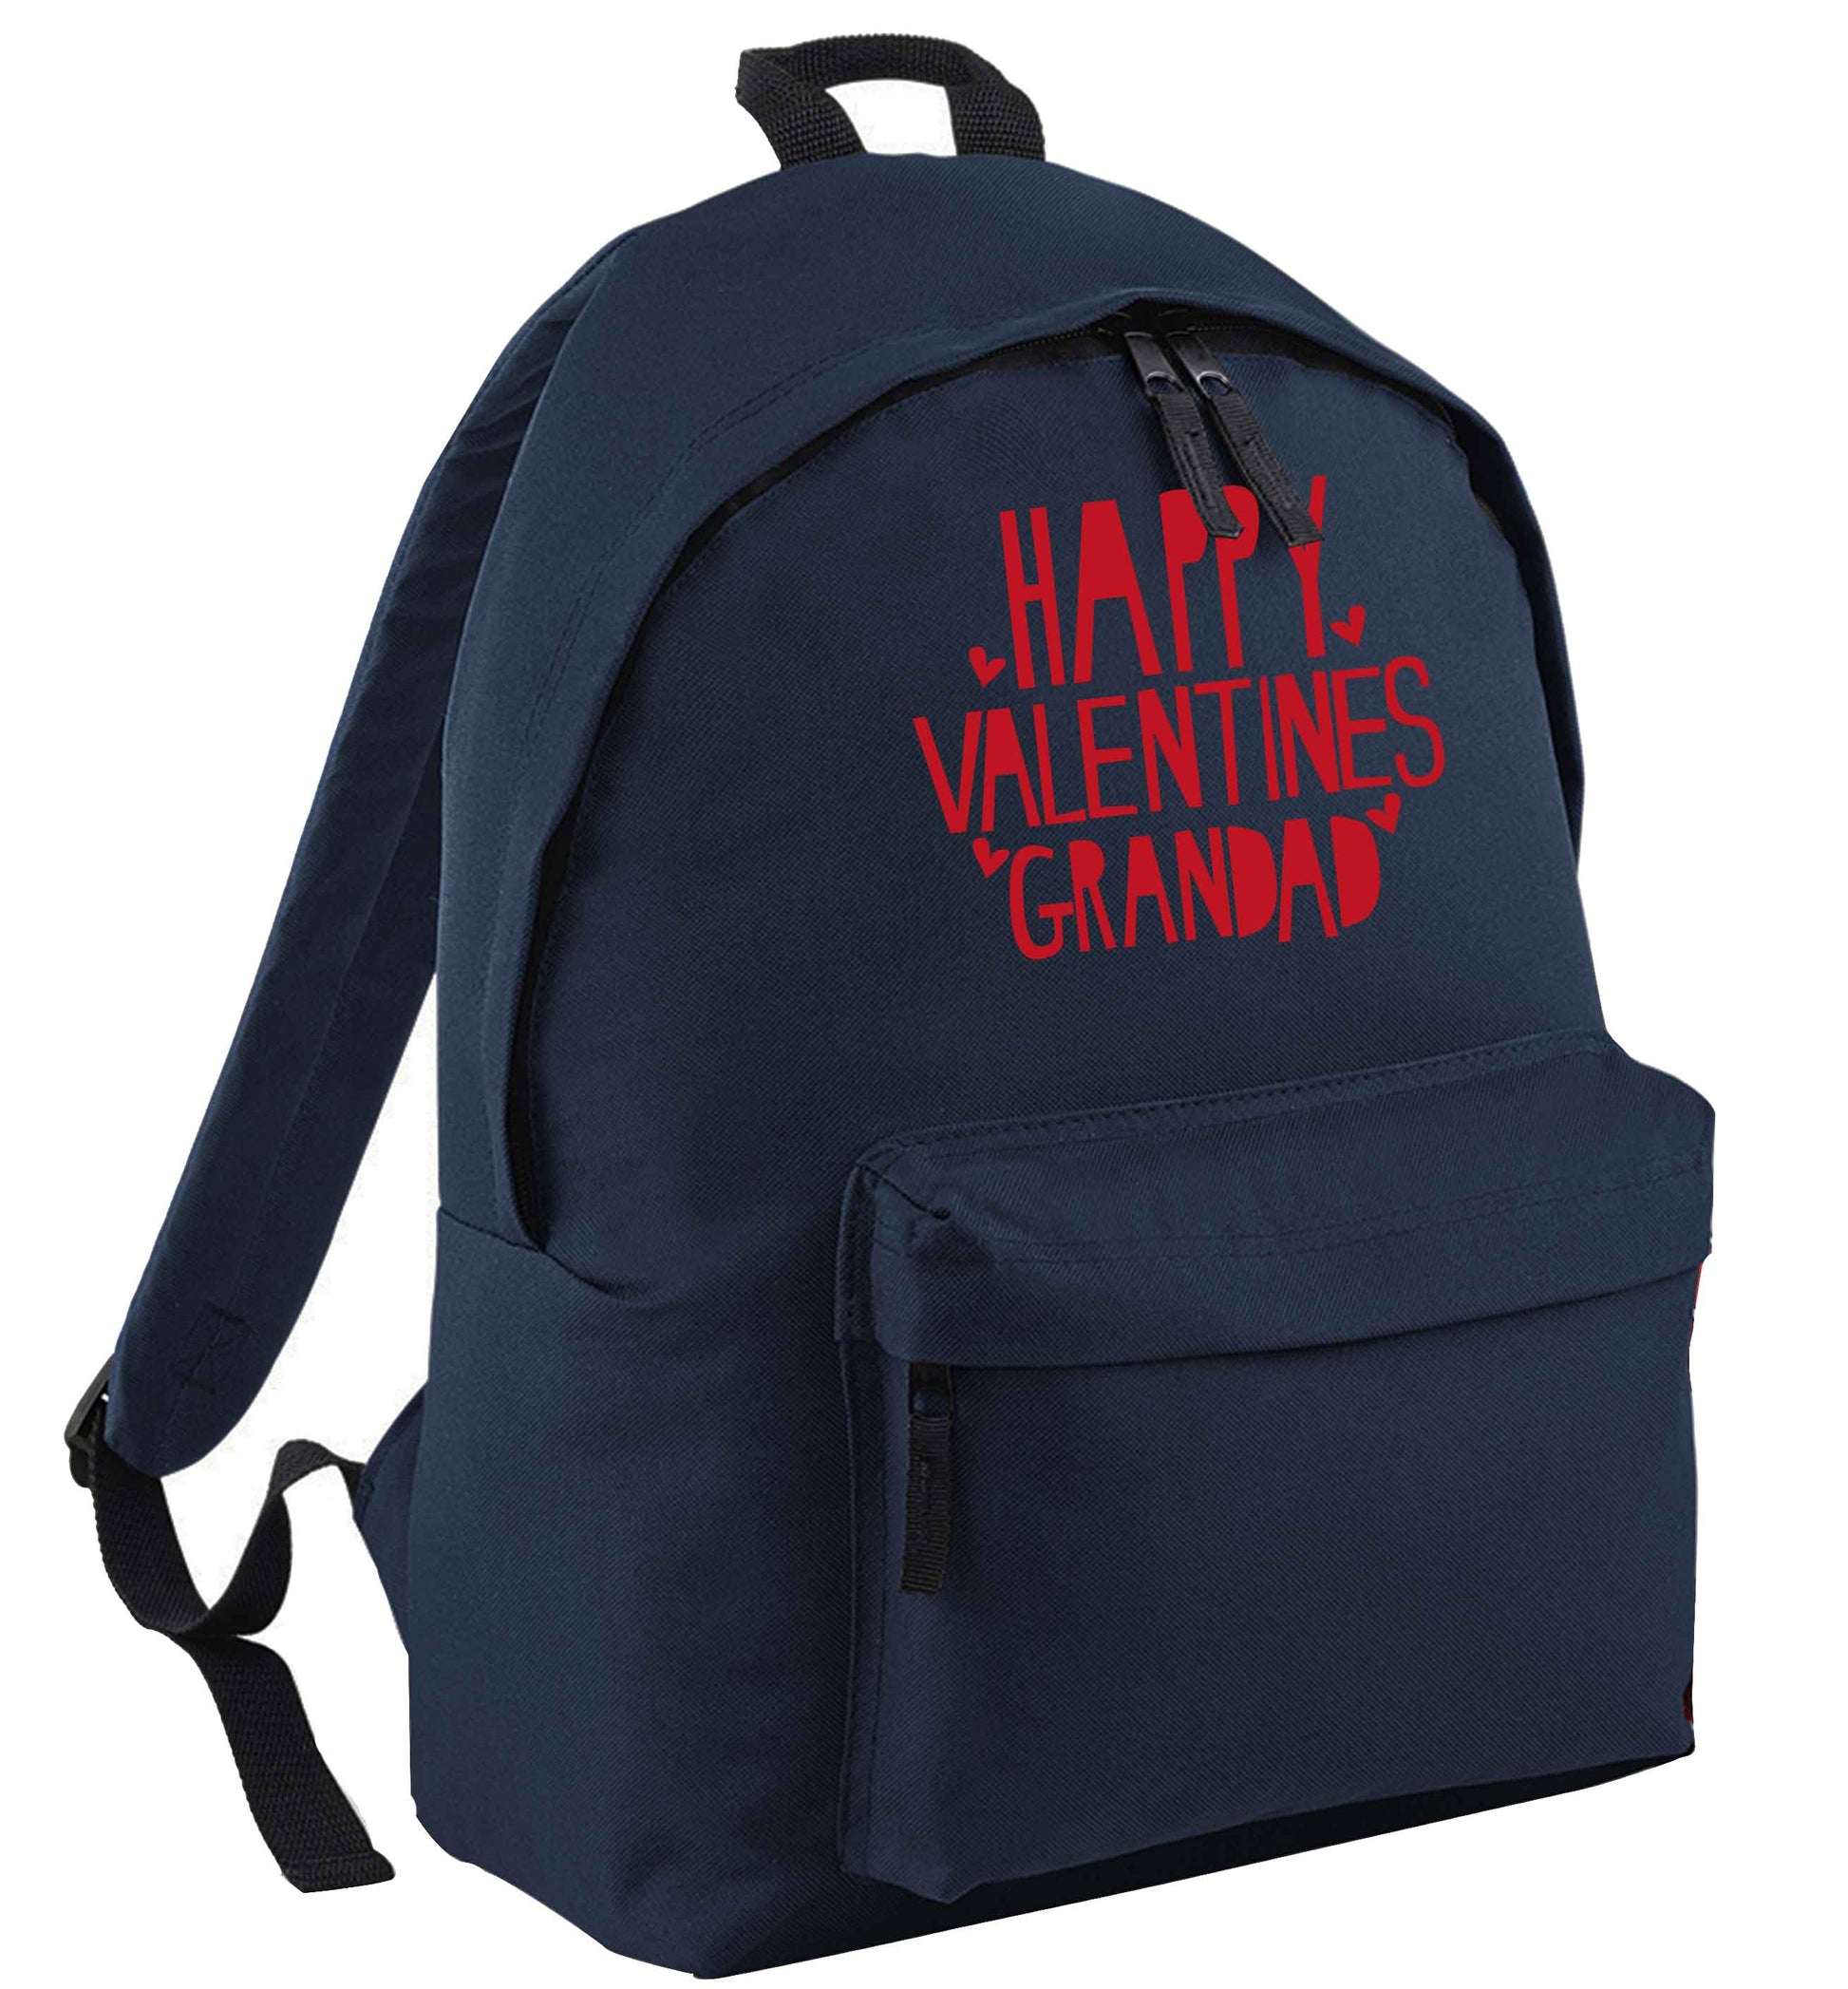 Happy valentines grandad navy adults backpack